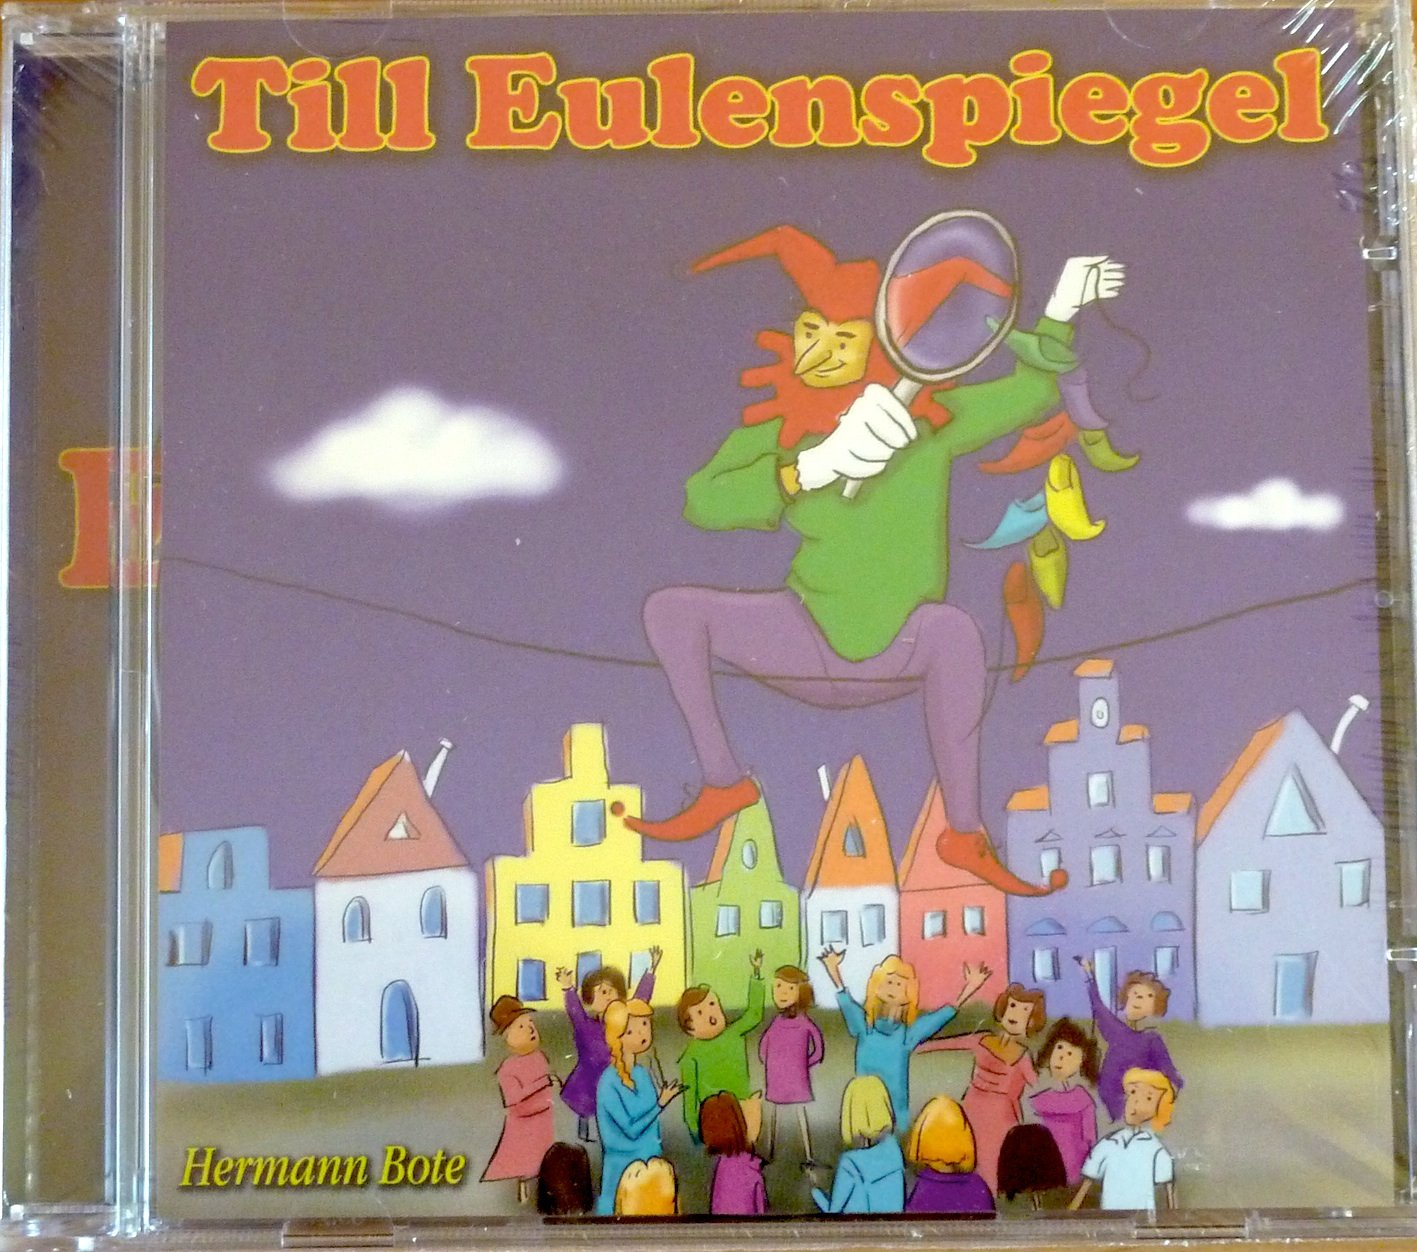 Till Eulenspiegel - Various